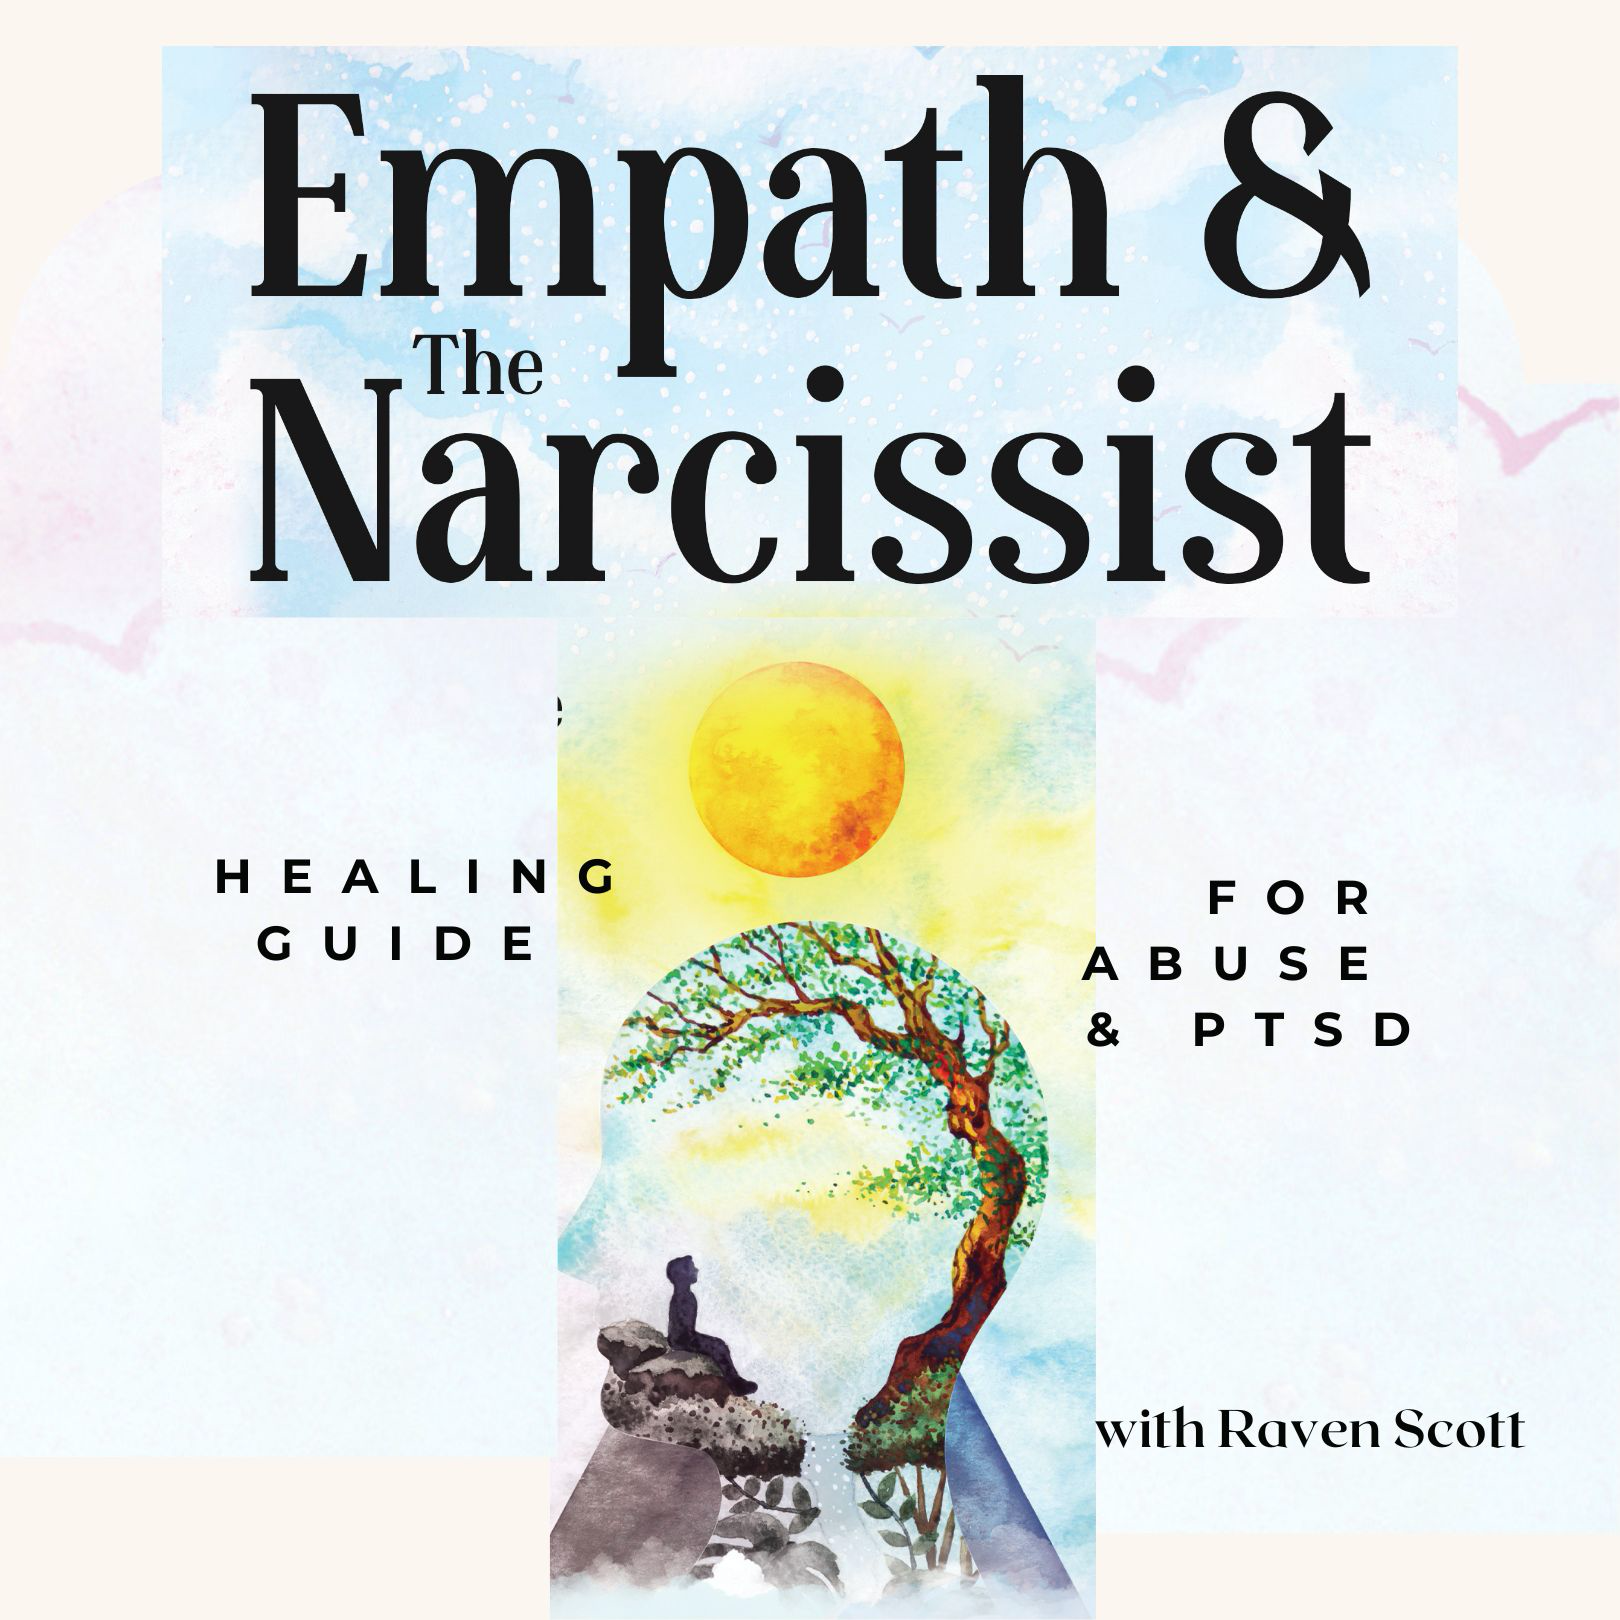 Empath & The Narcissist